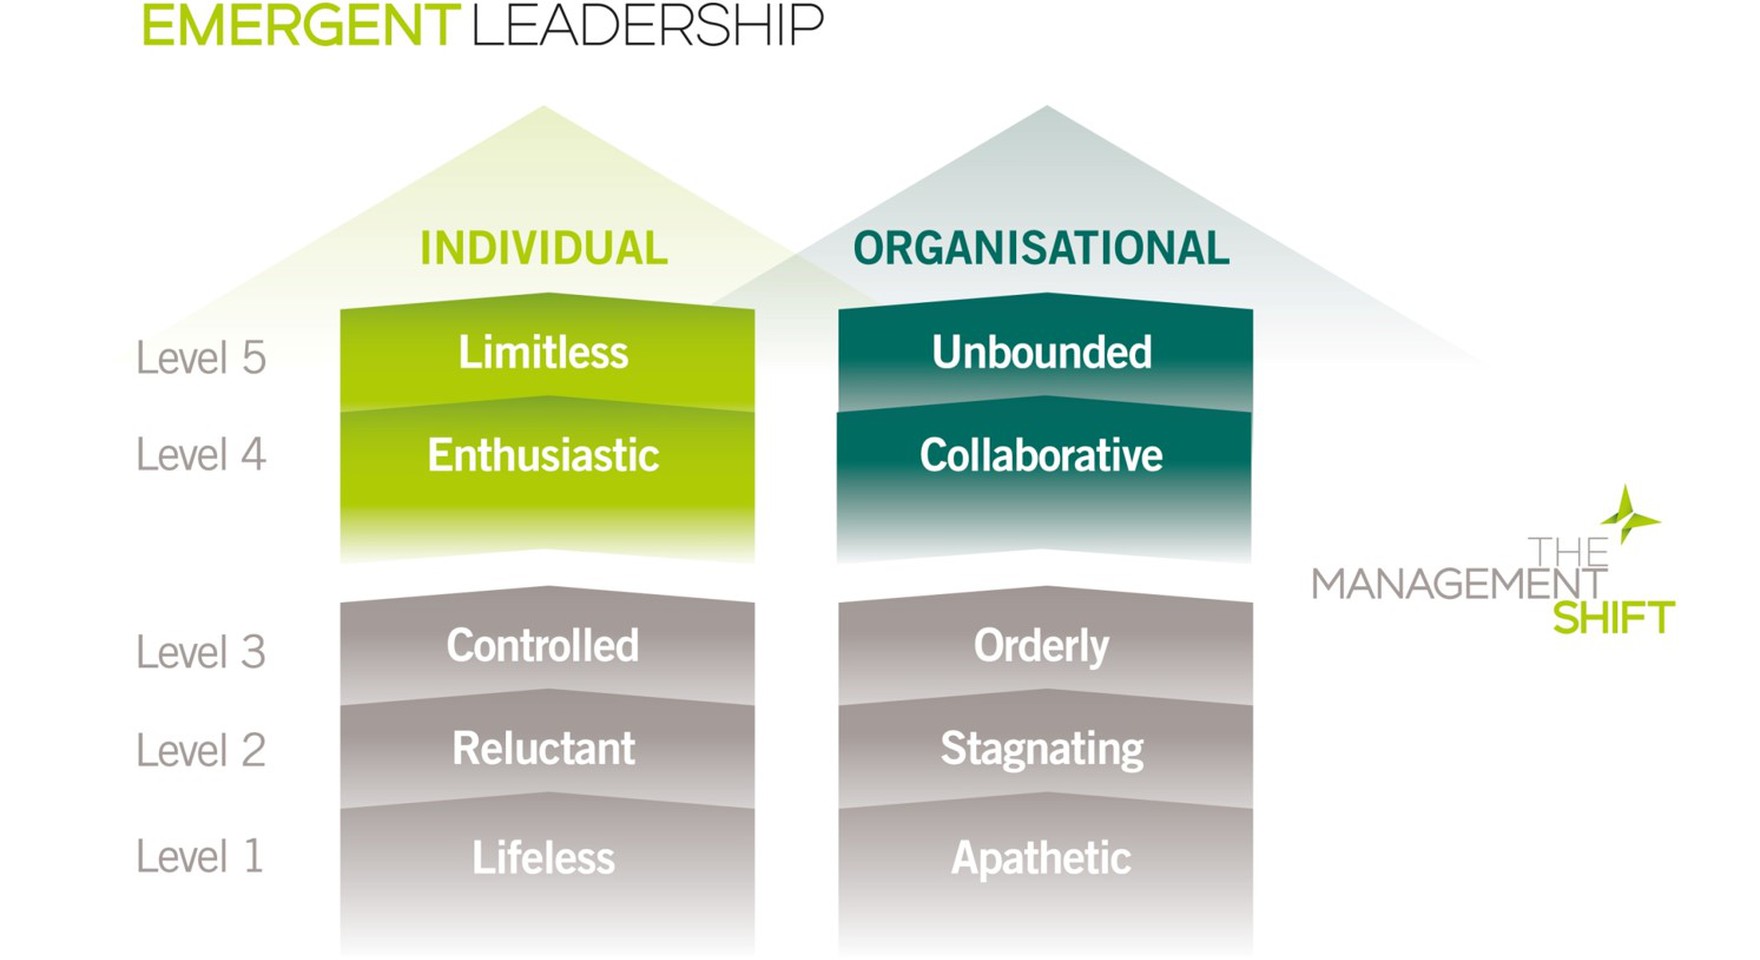 Emergent Leadership - The Management Shift